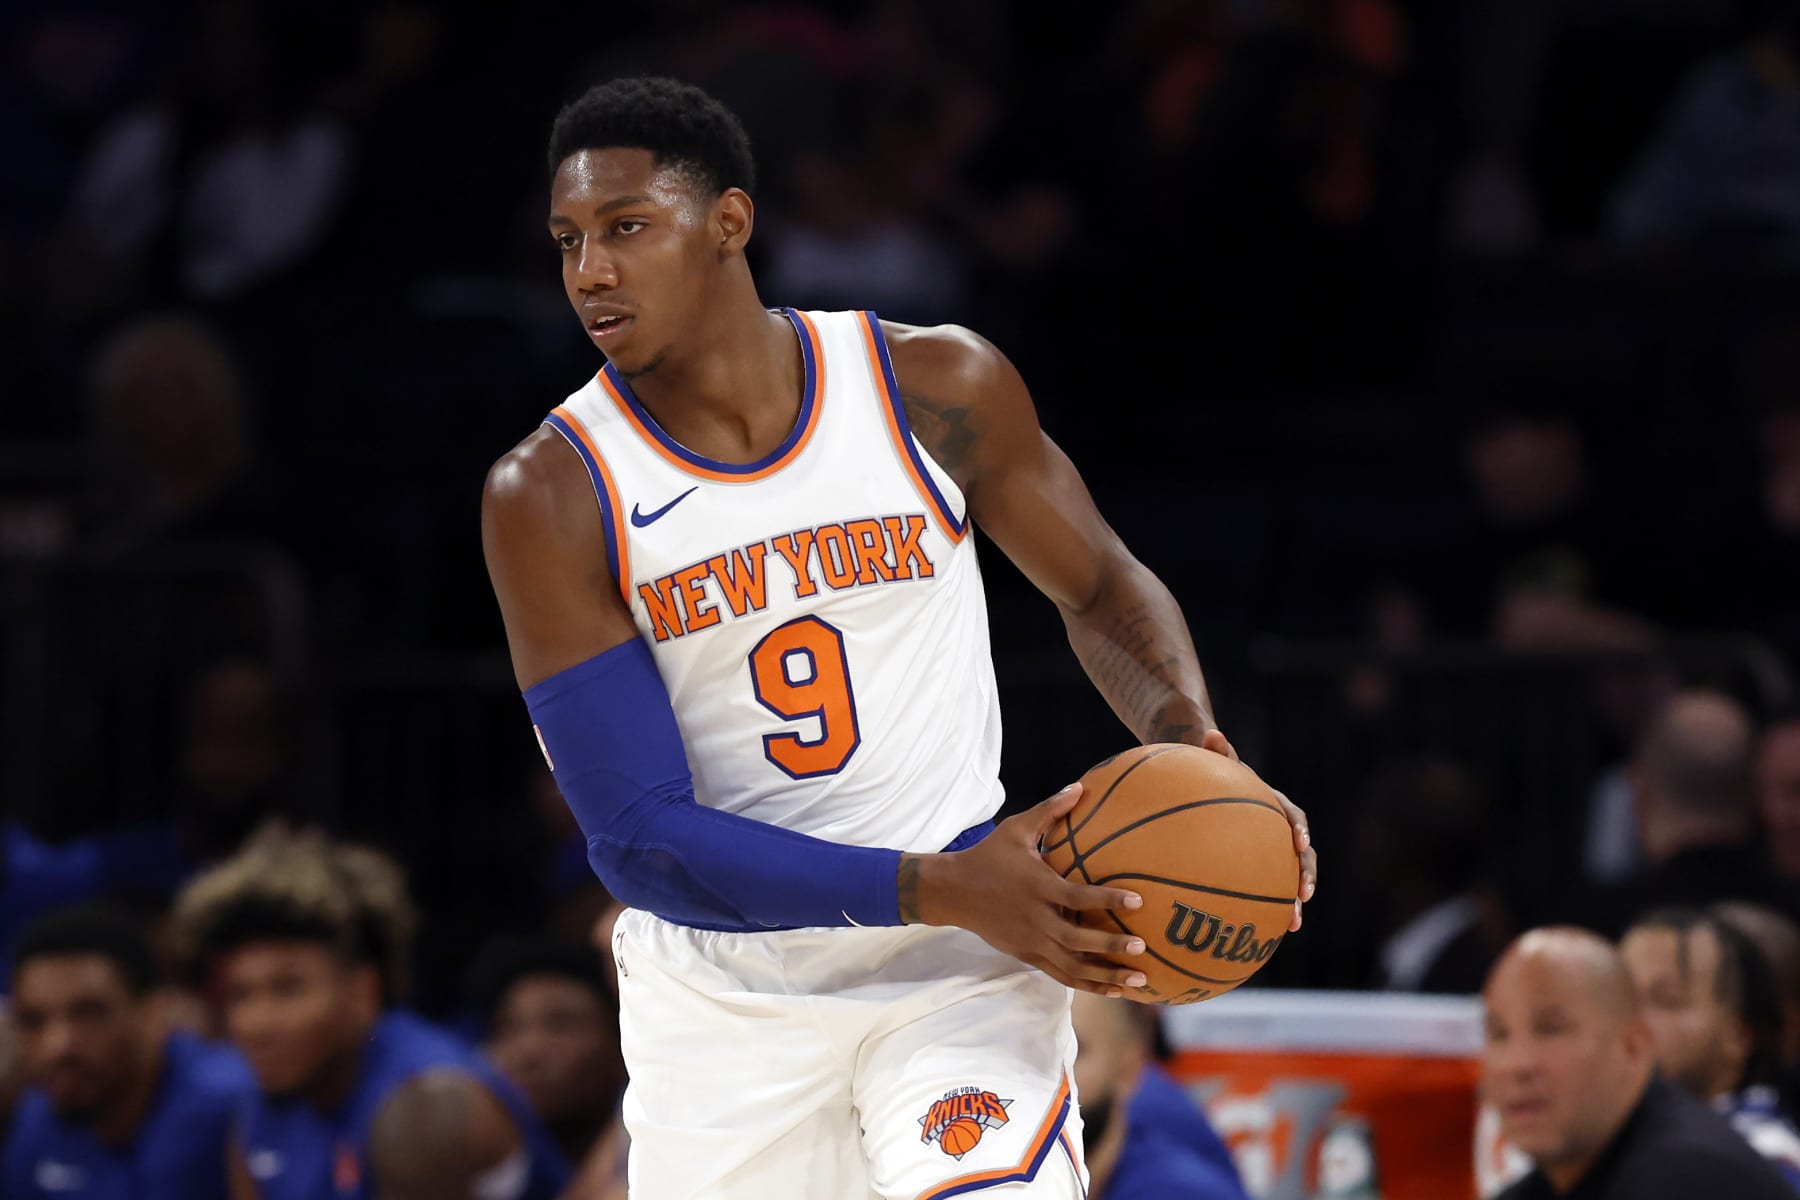 Derrick Rose New York Knicks 2023 Icon Edition Youth NBA Swingman